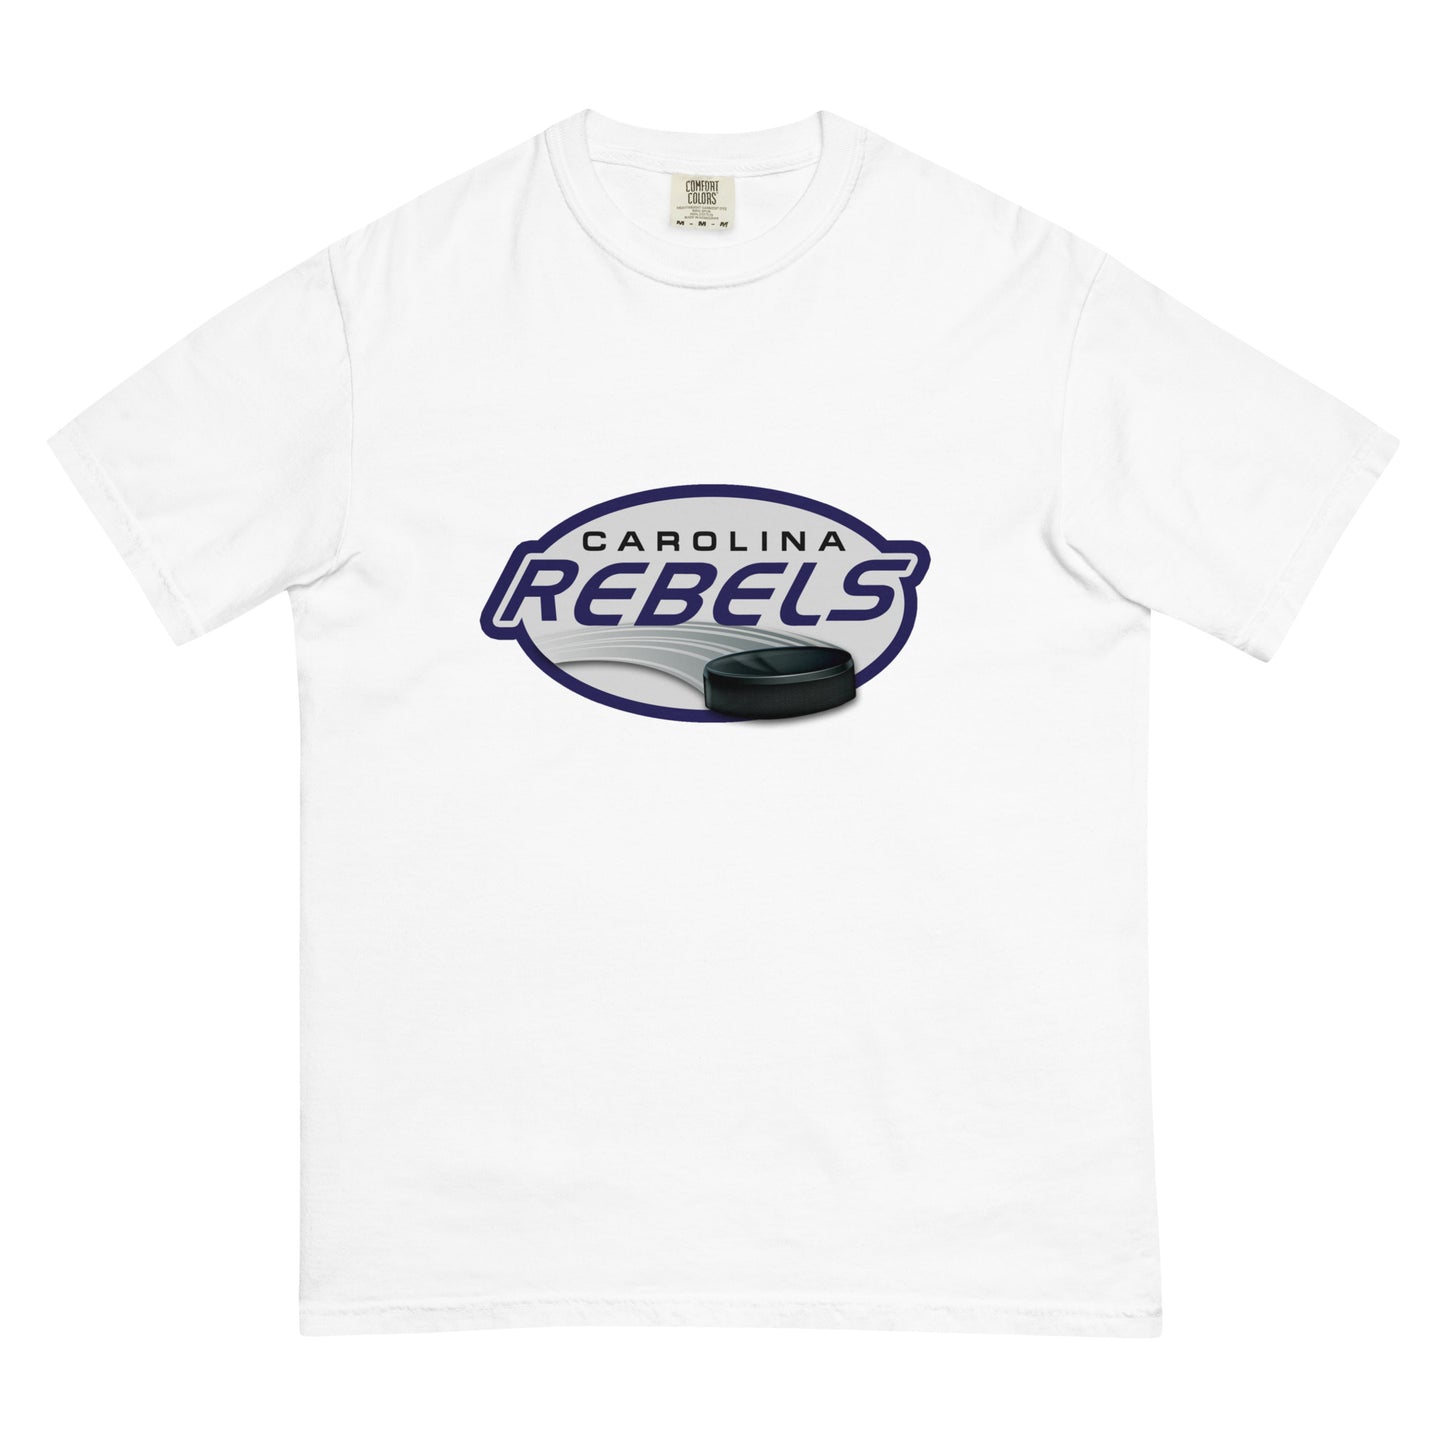 Unisex t-shirt: Carolina Rebels - Marc Polinski